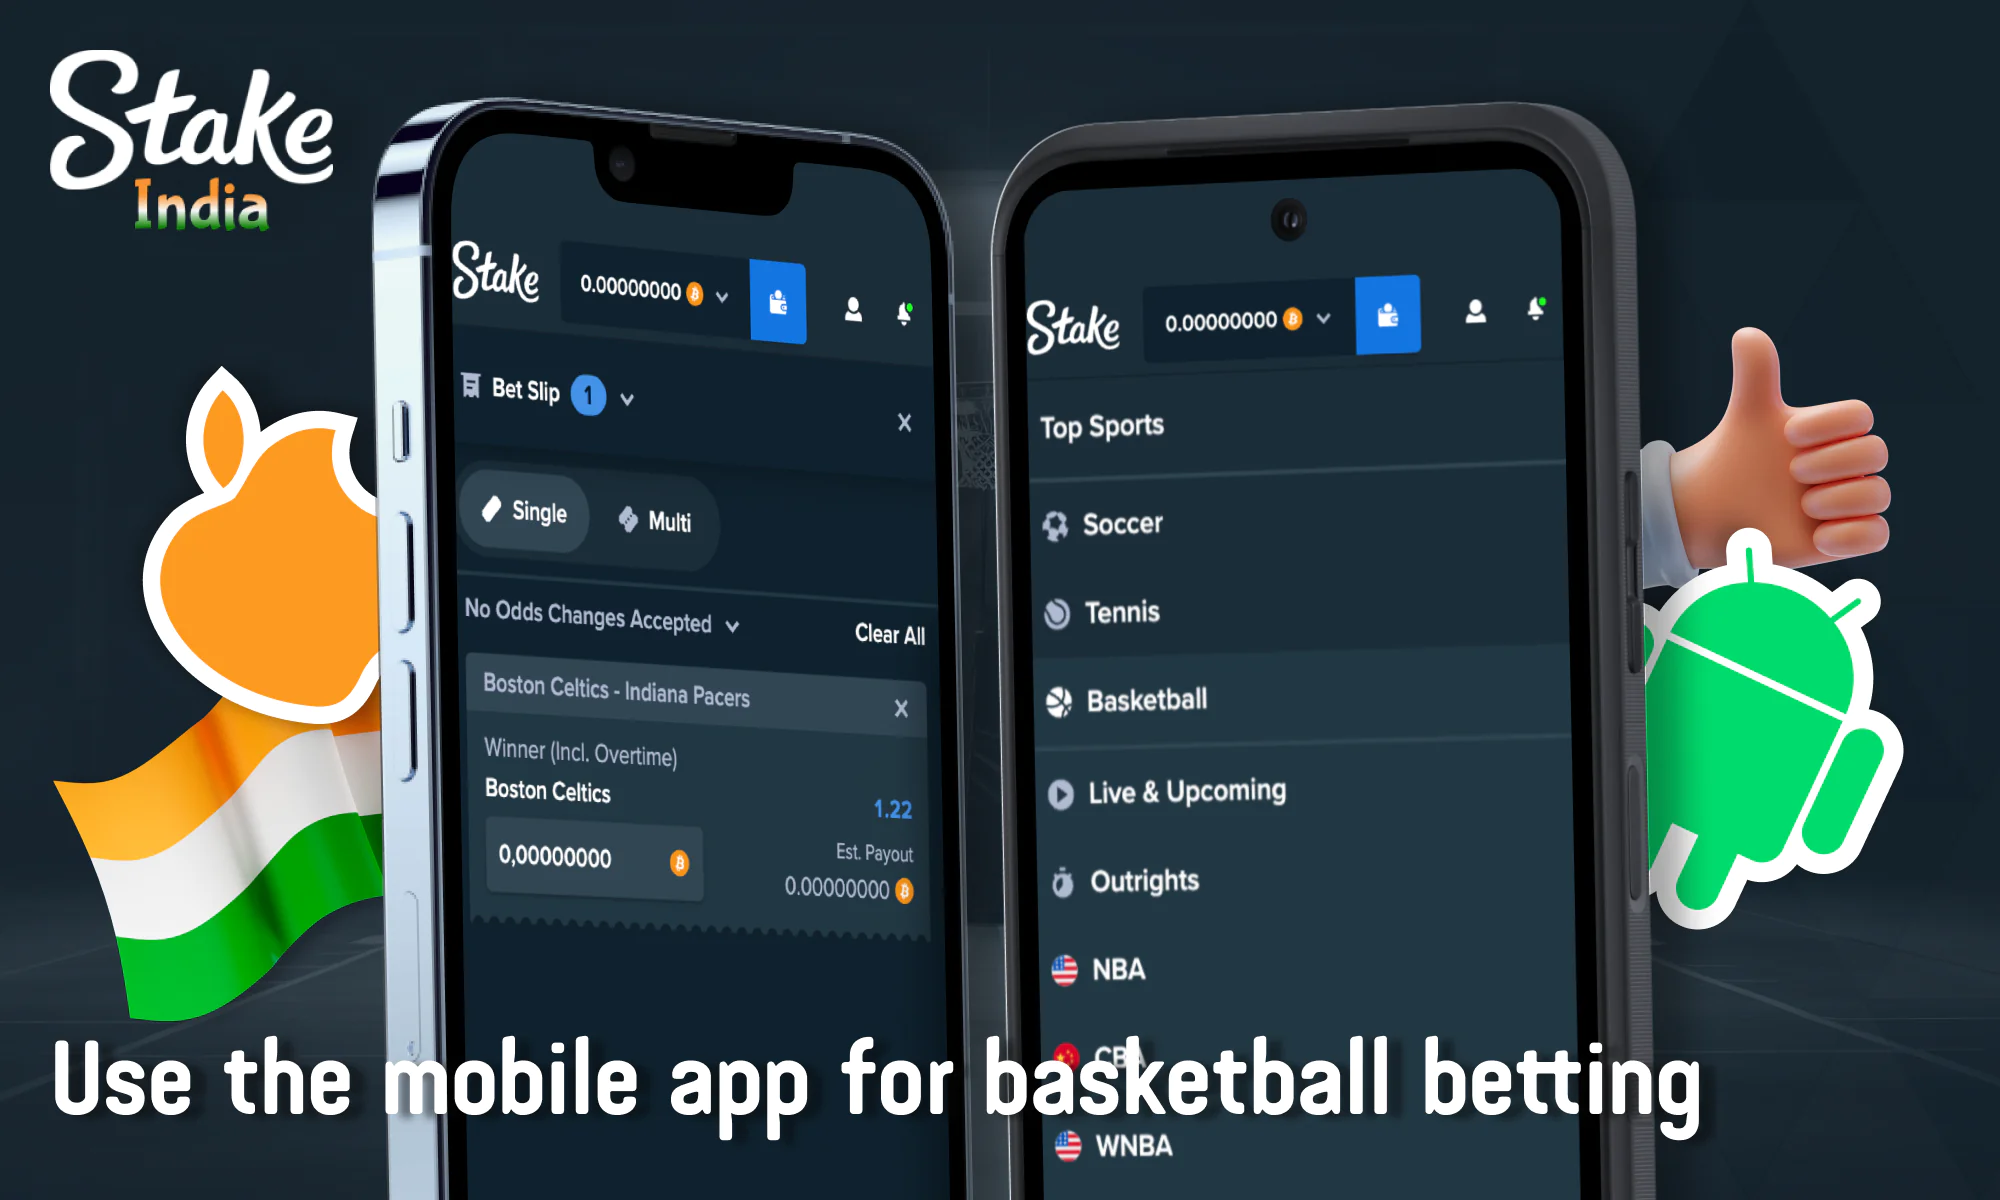 Stake India - Mobile App for basketball betting